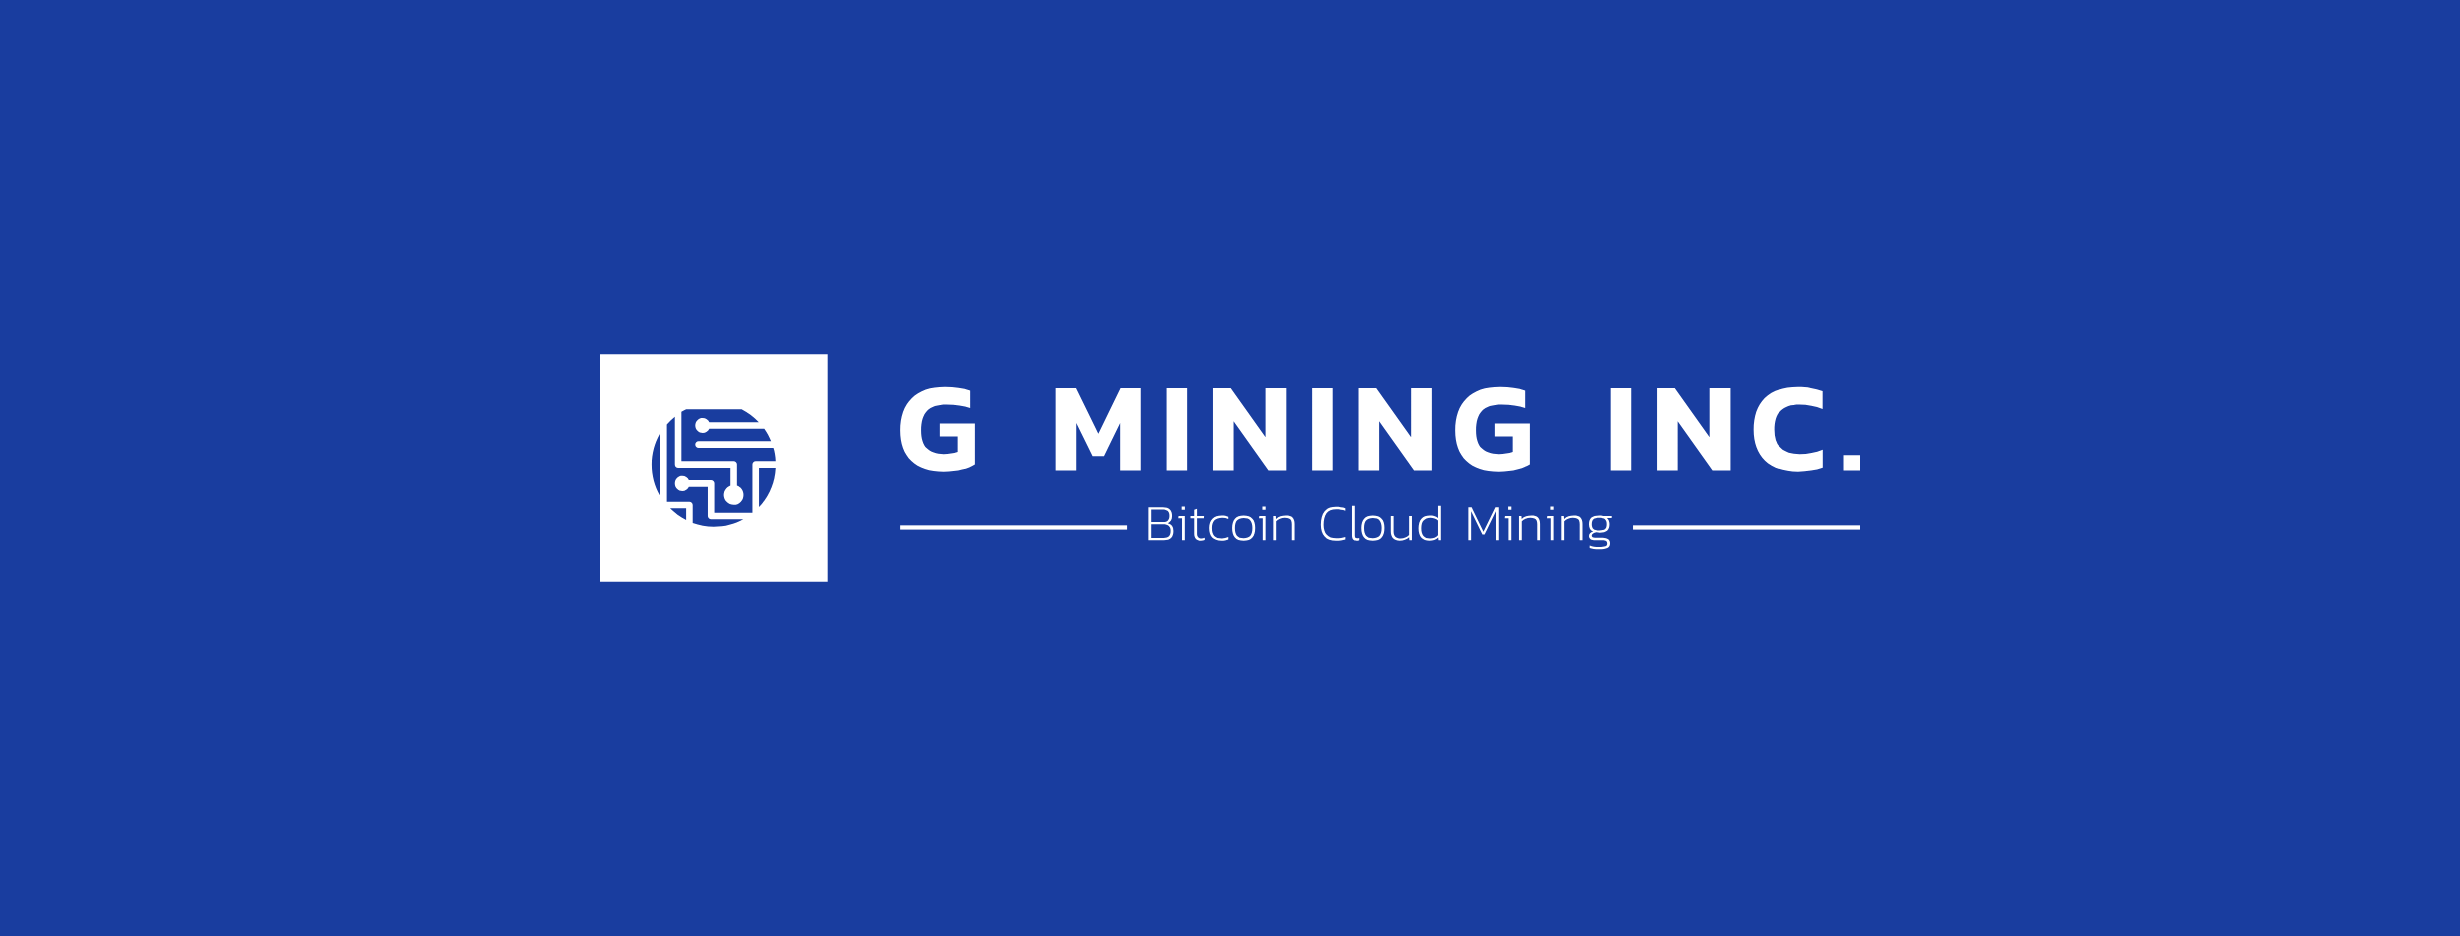 g mining